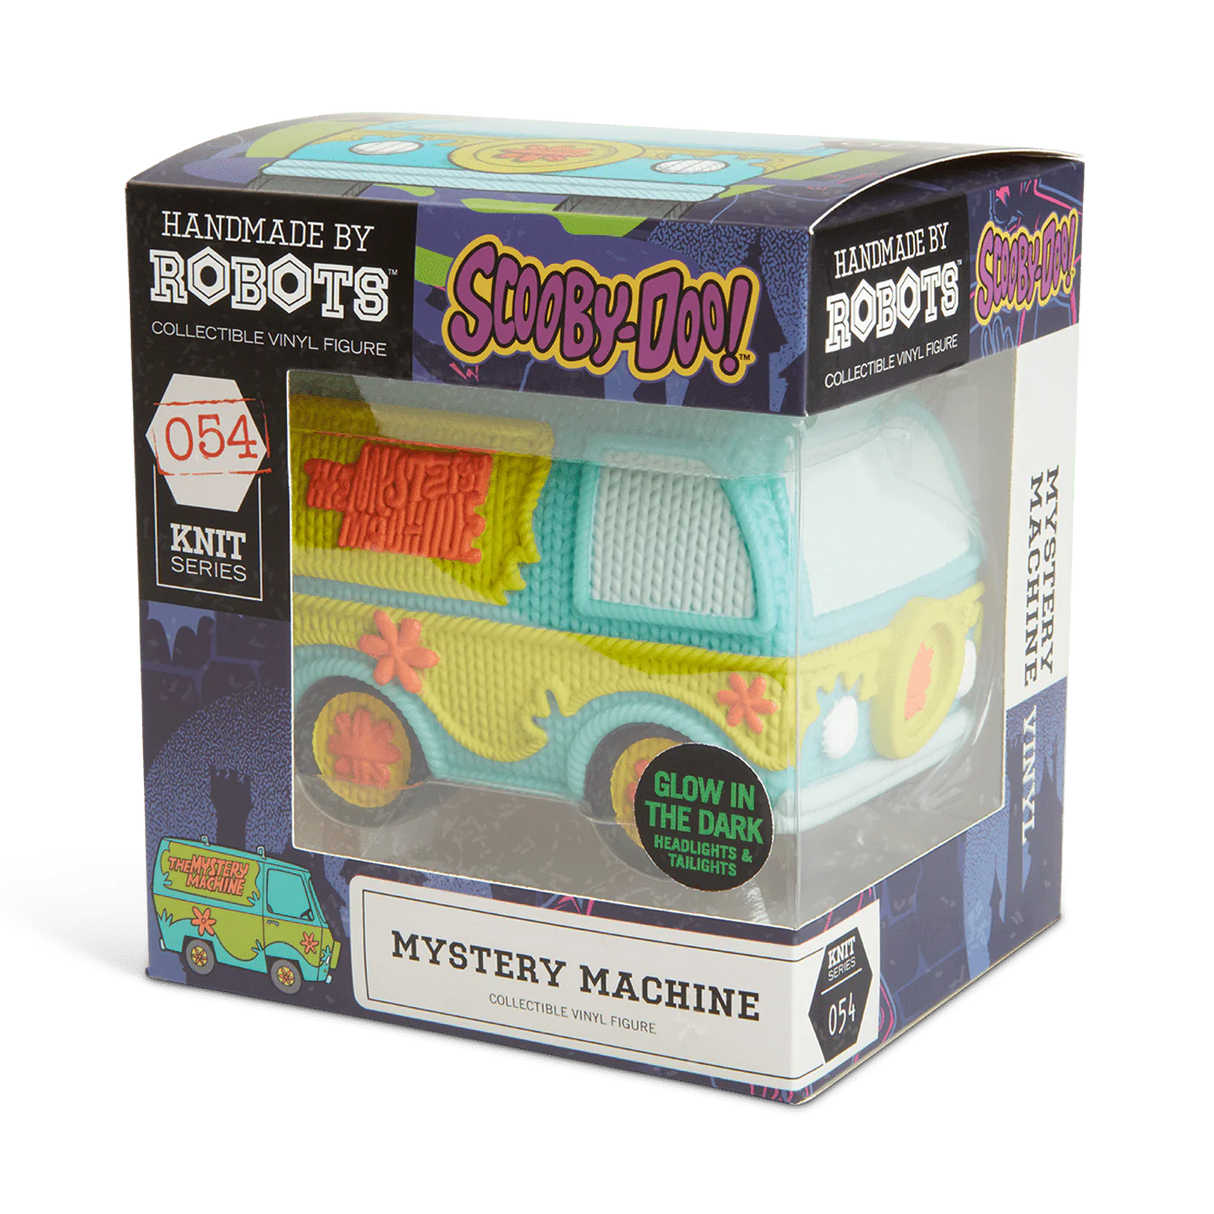 Scooby Doo | Mystery Machine | Handmade by Robots | Vinyl Figure | Glow in the Dark | Knit Series #054